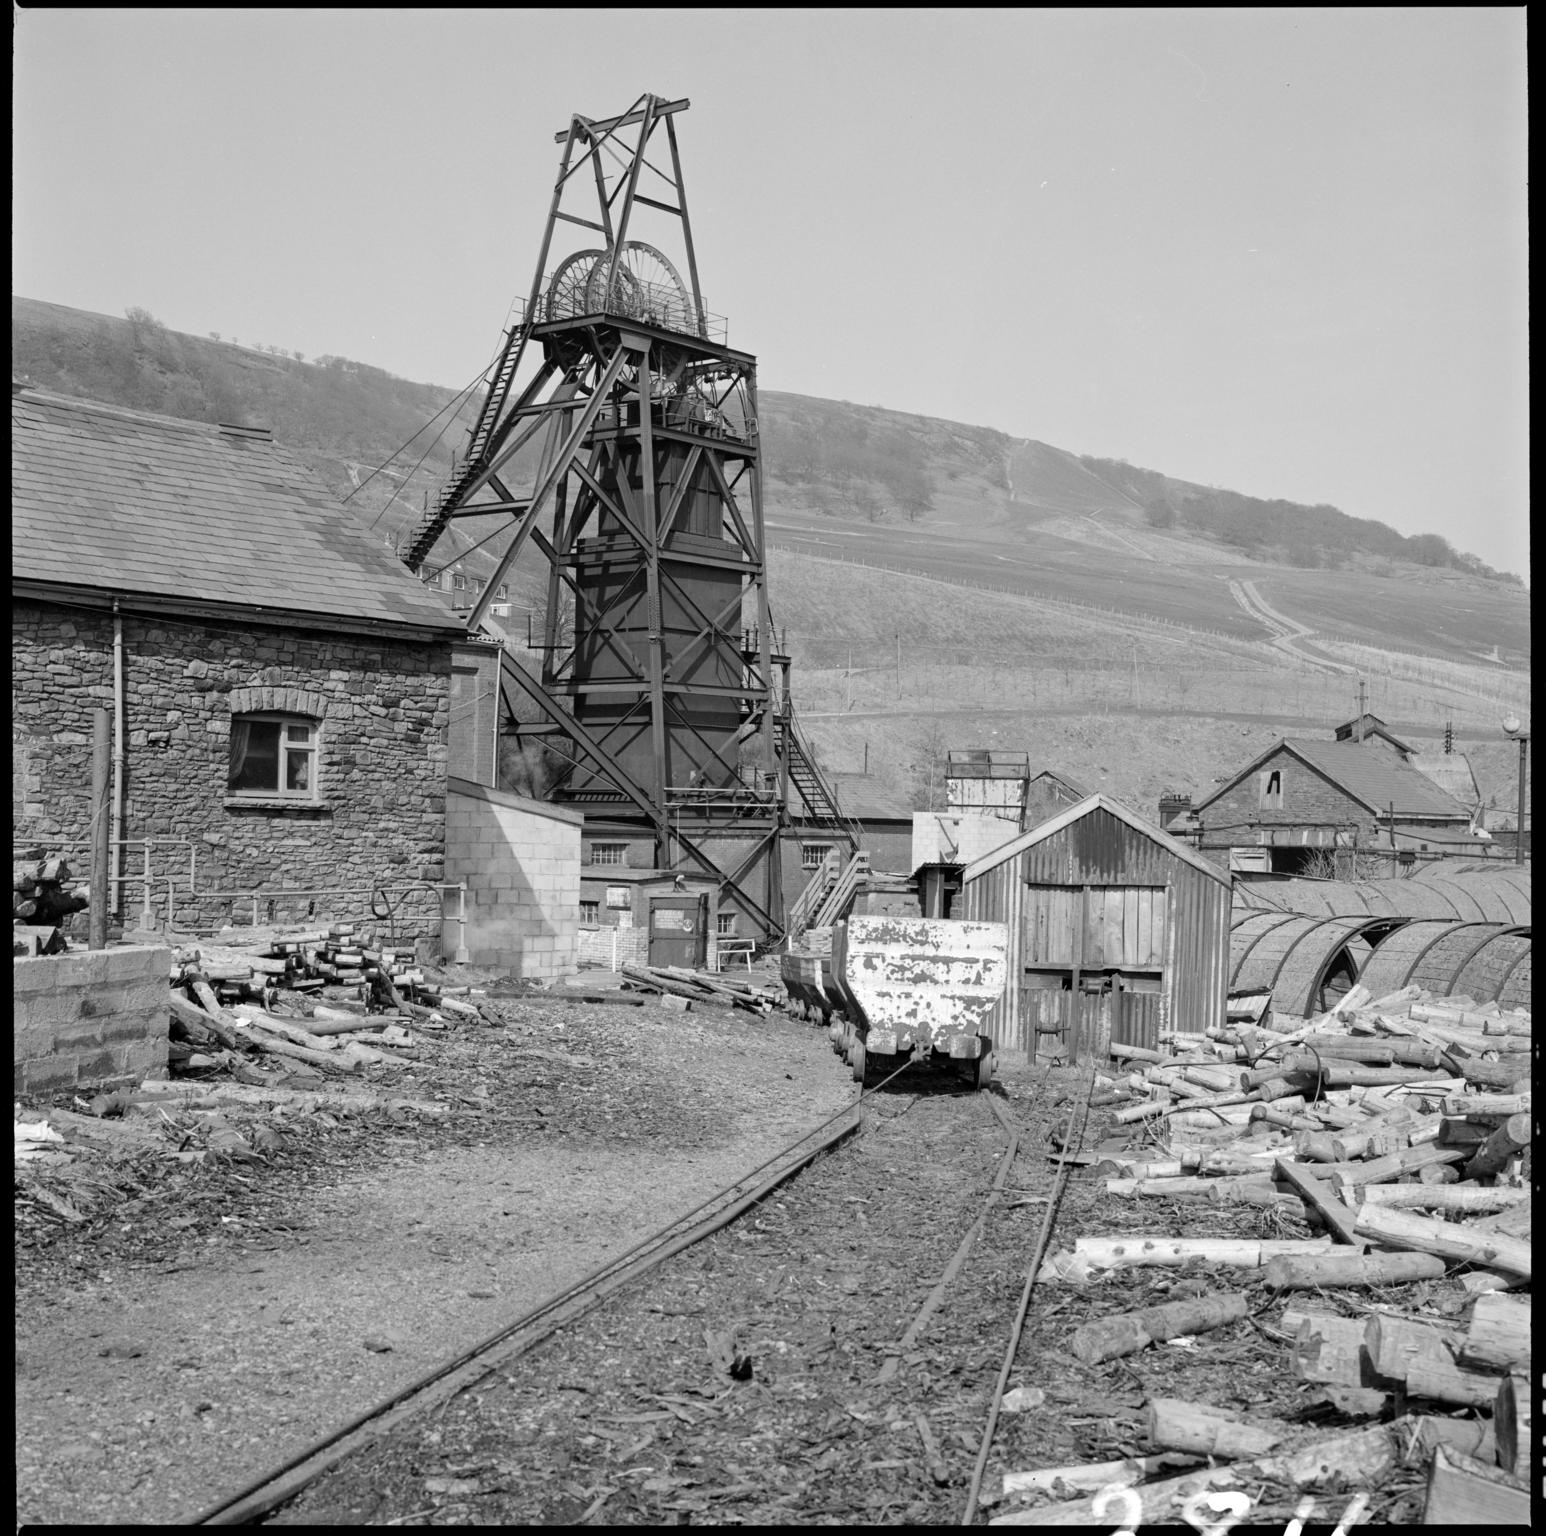 Cwmtillery Colliery, film negative